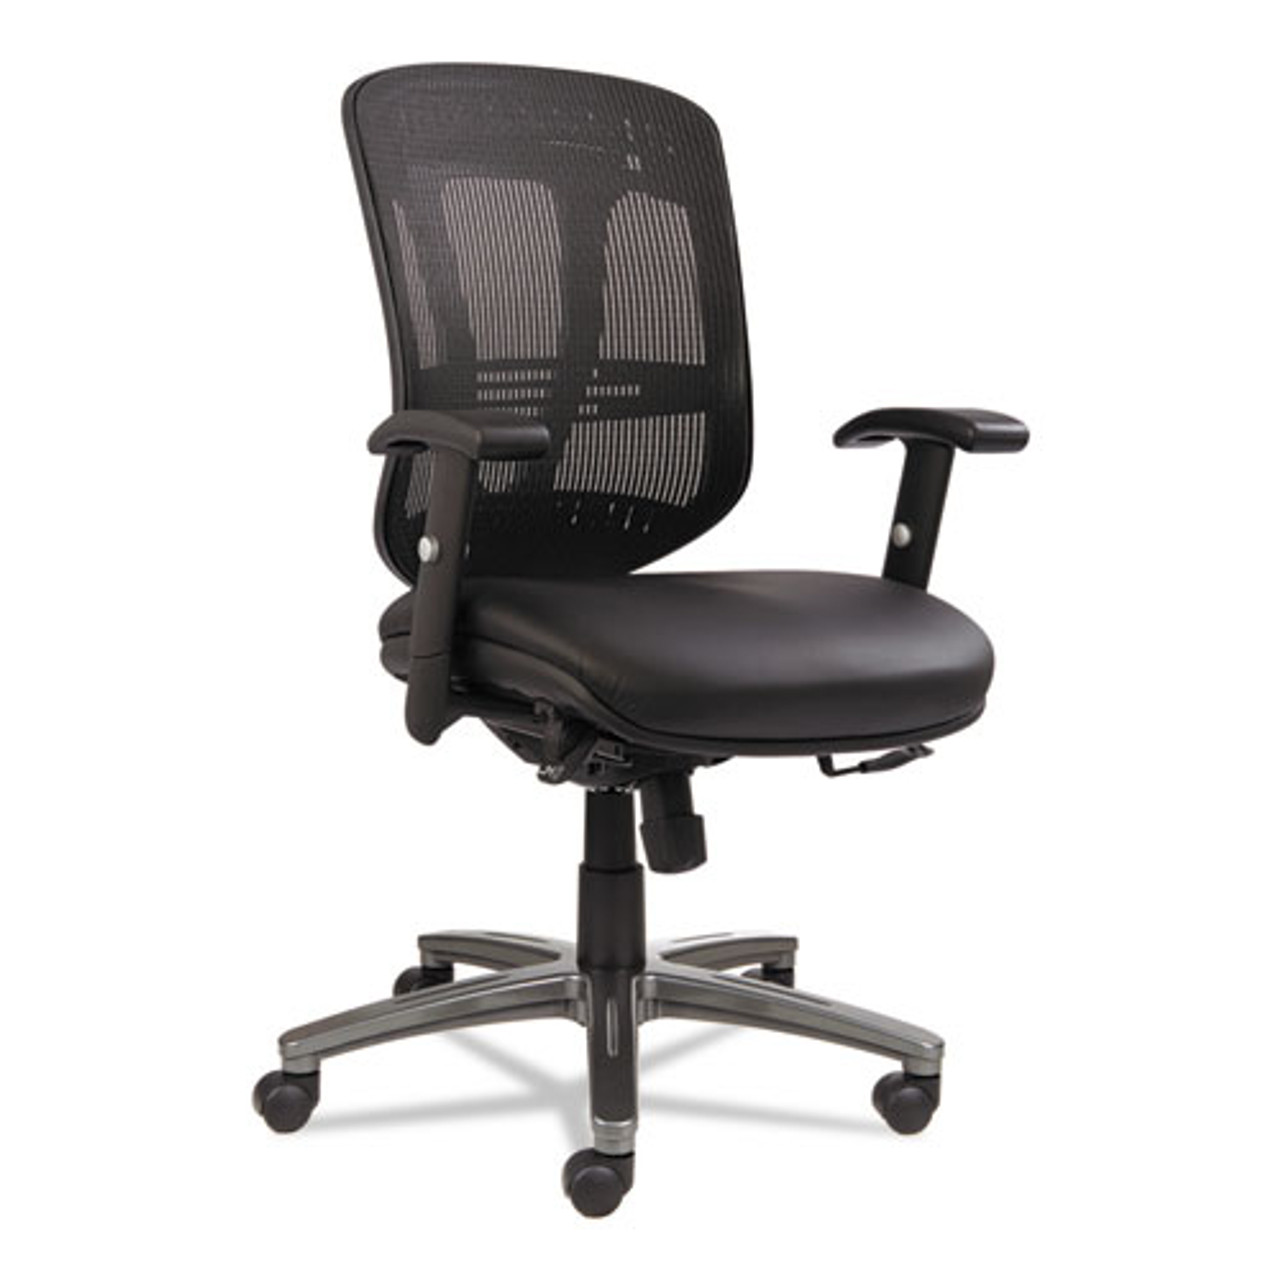 Multifunction Mid-Back Leather/mesh Chair, Black, #AL-1101